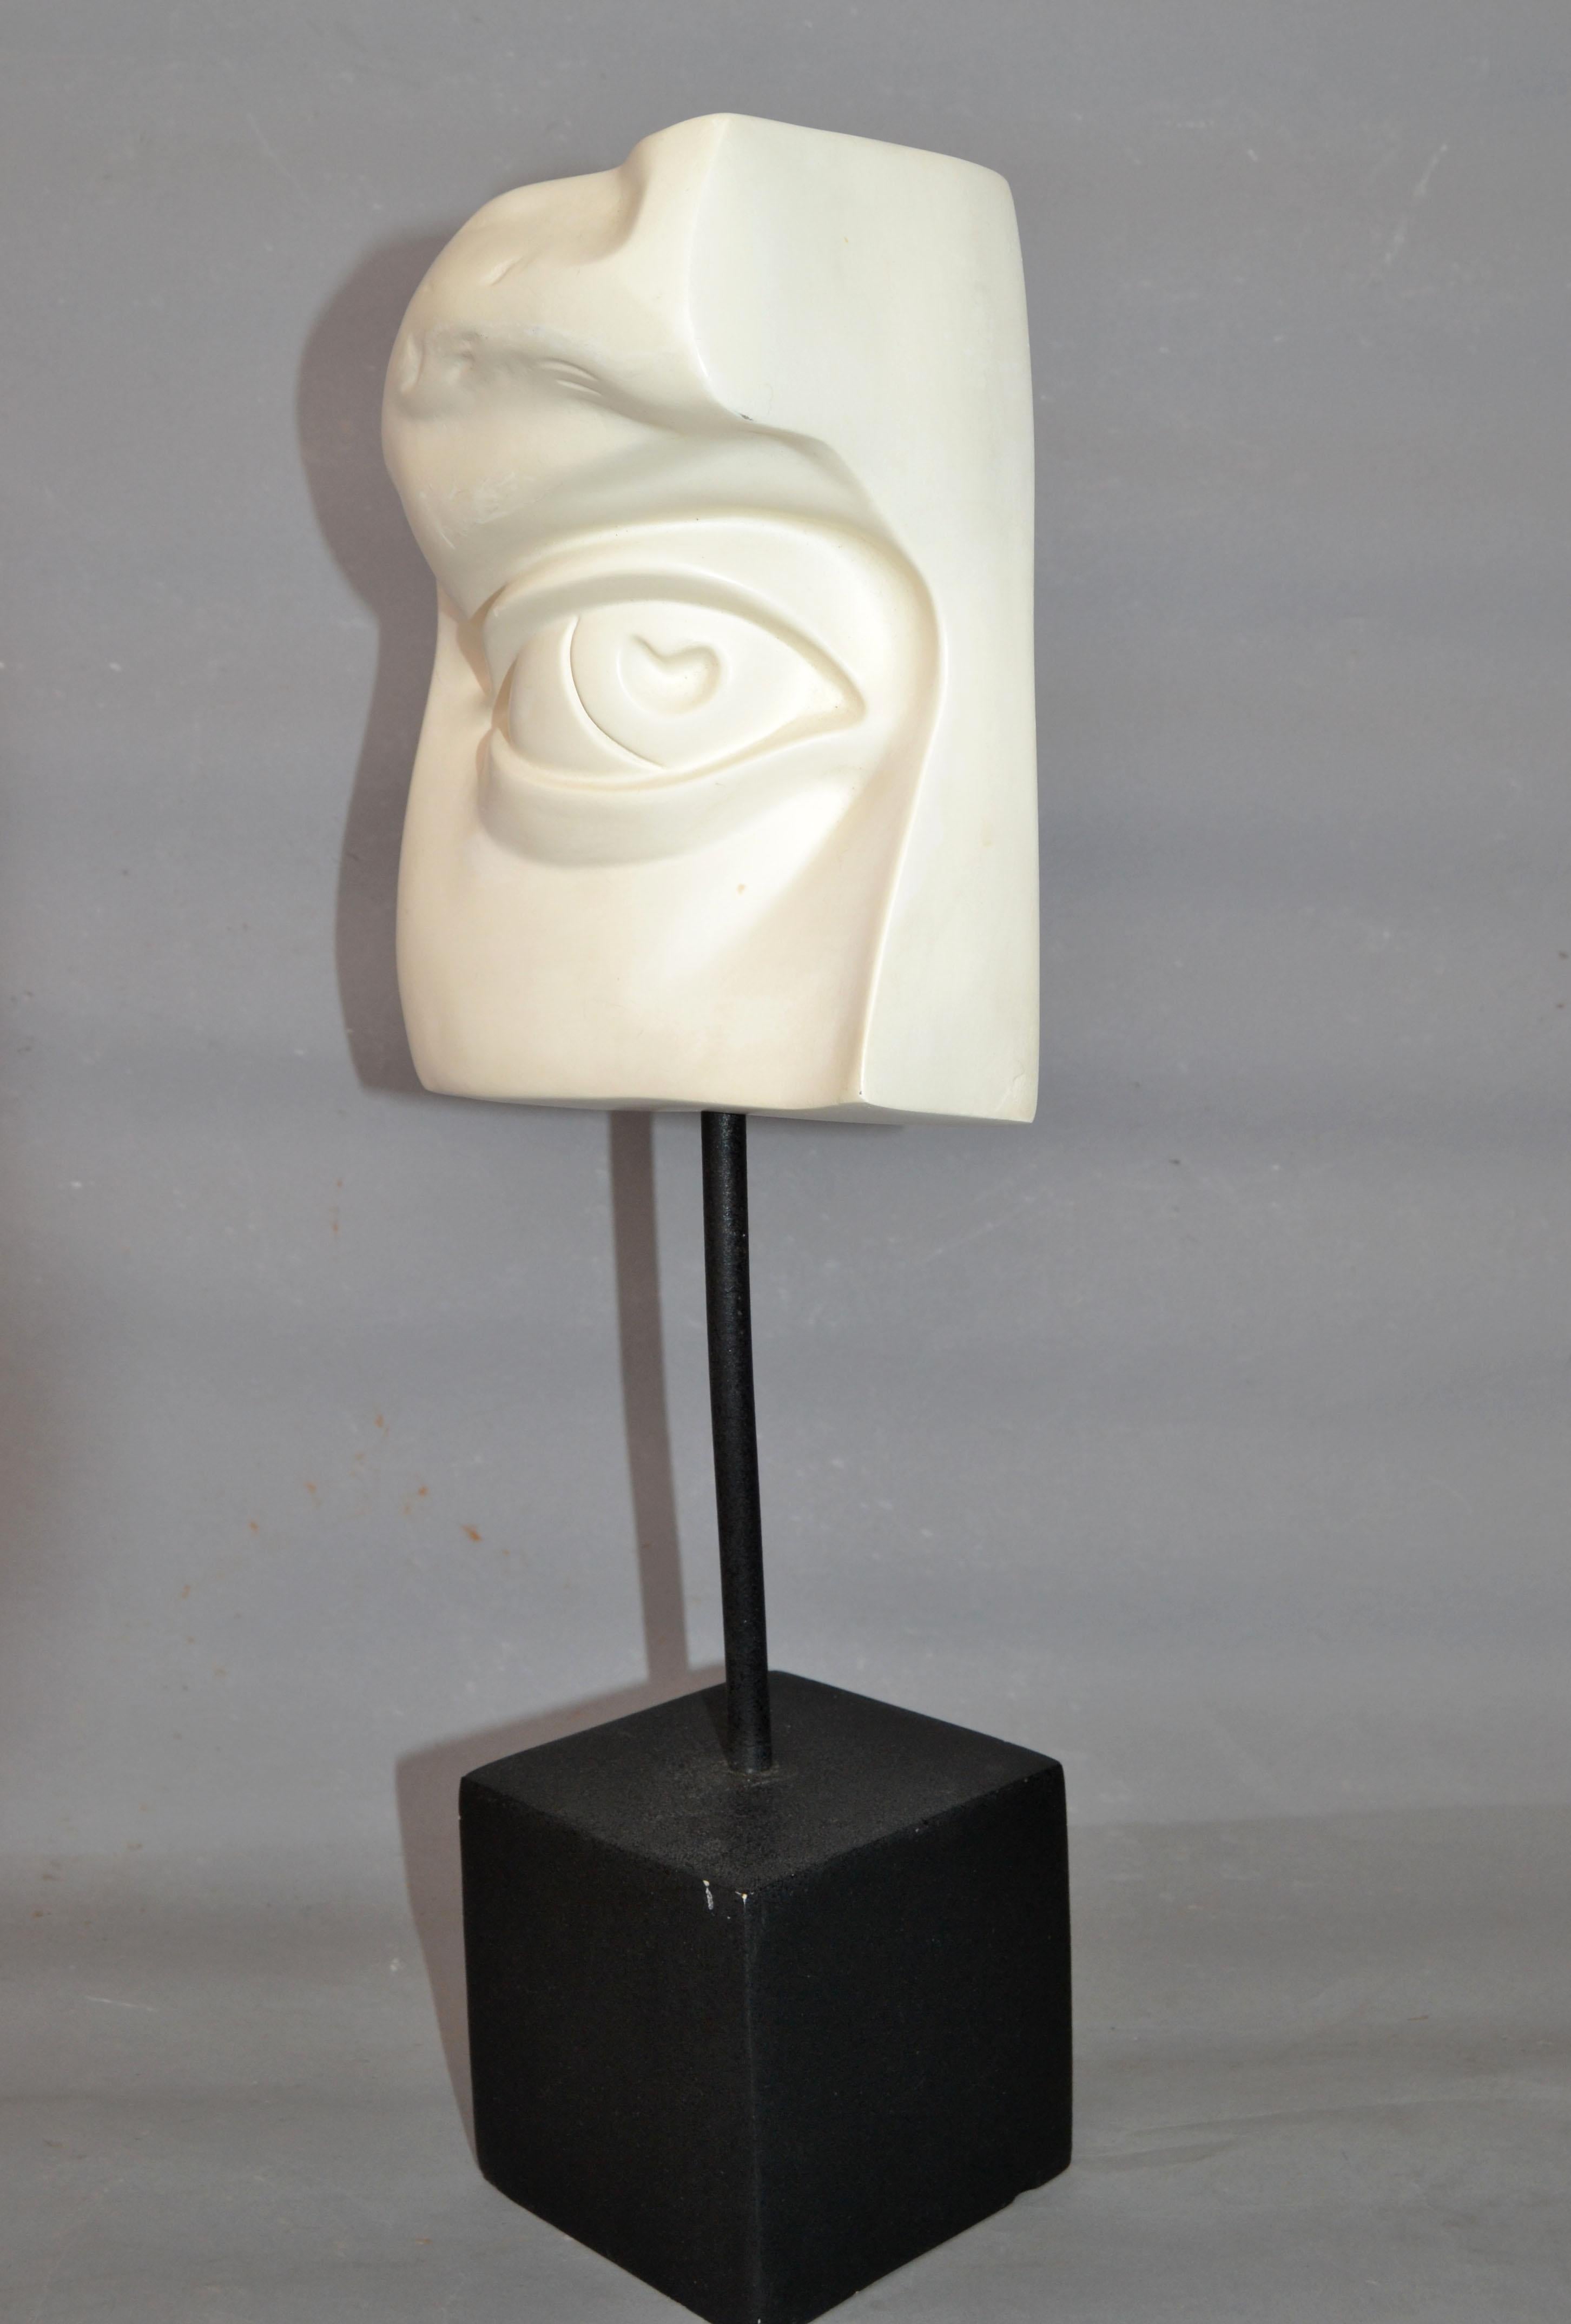 Missing Eye of David Black & White Sculpture Plaster on Wood Mid-Century Modern For Sale 1